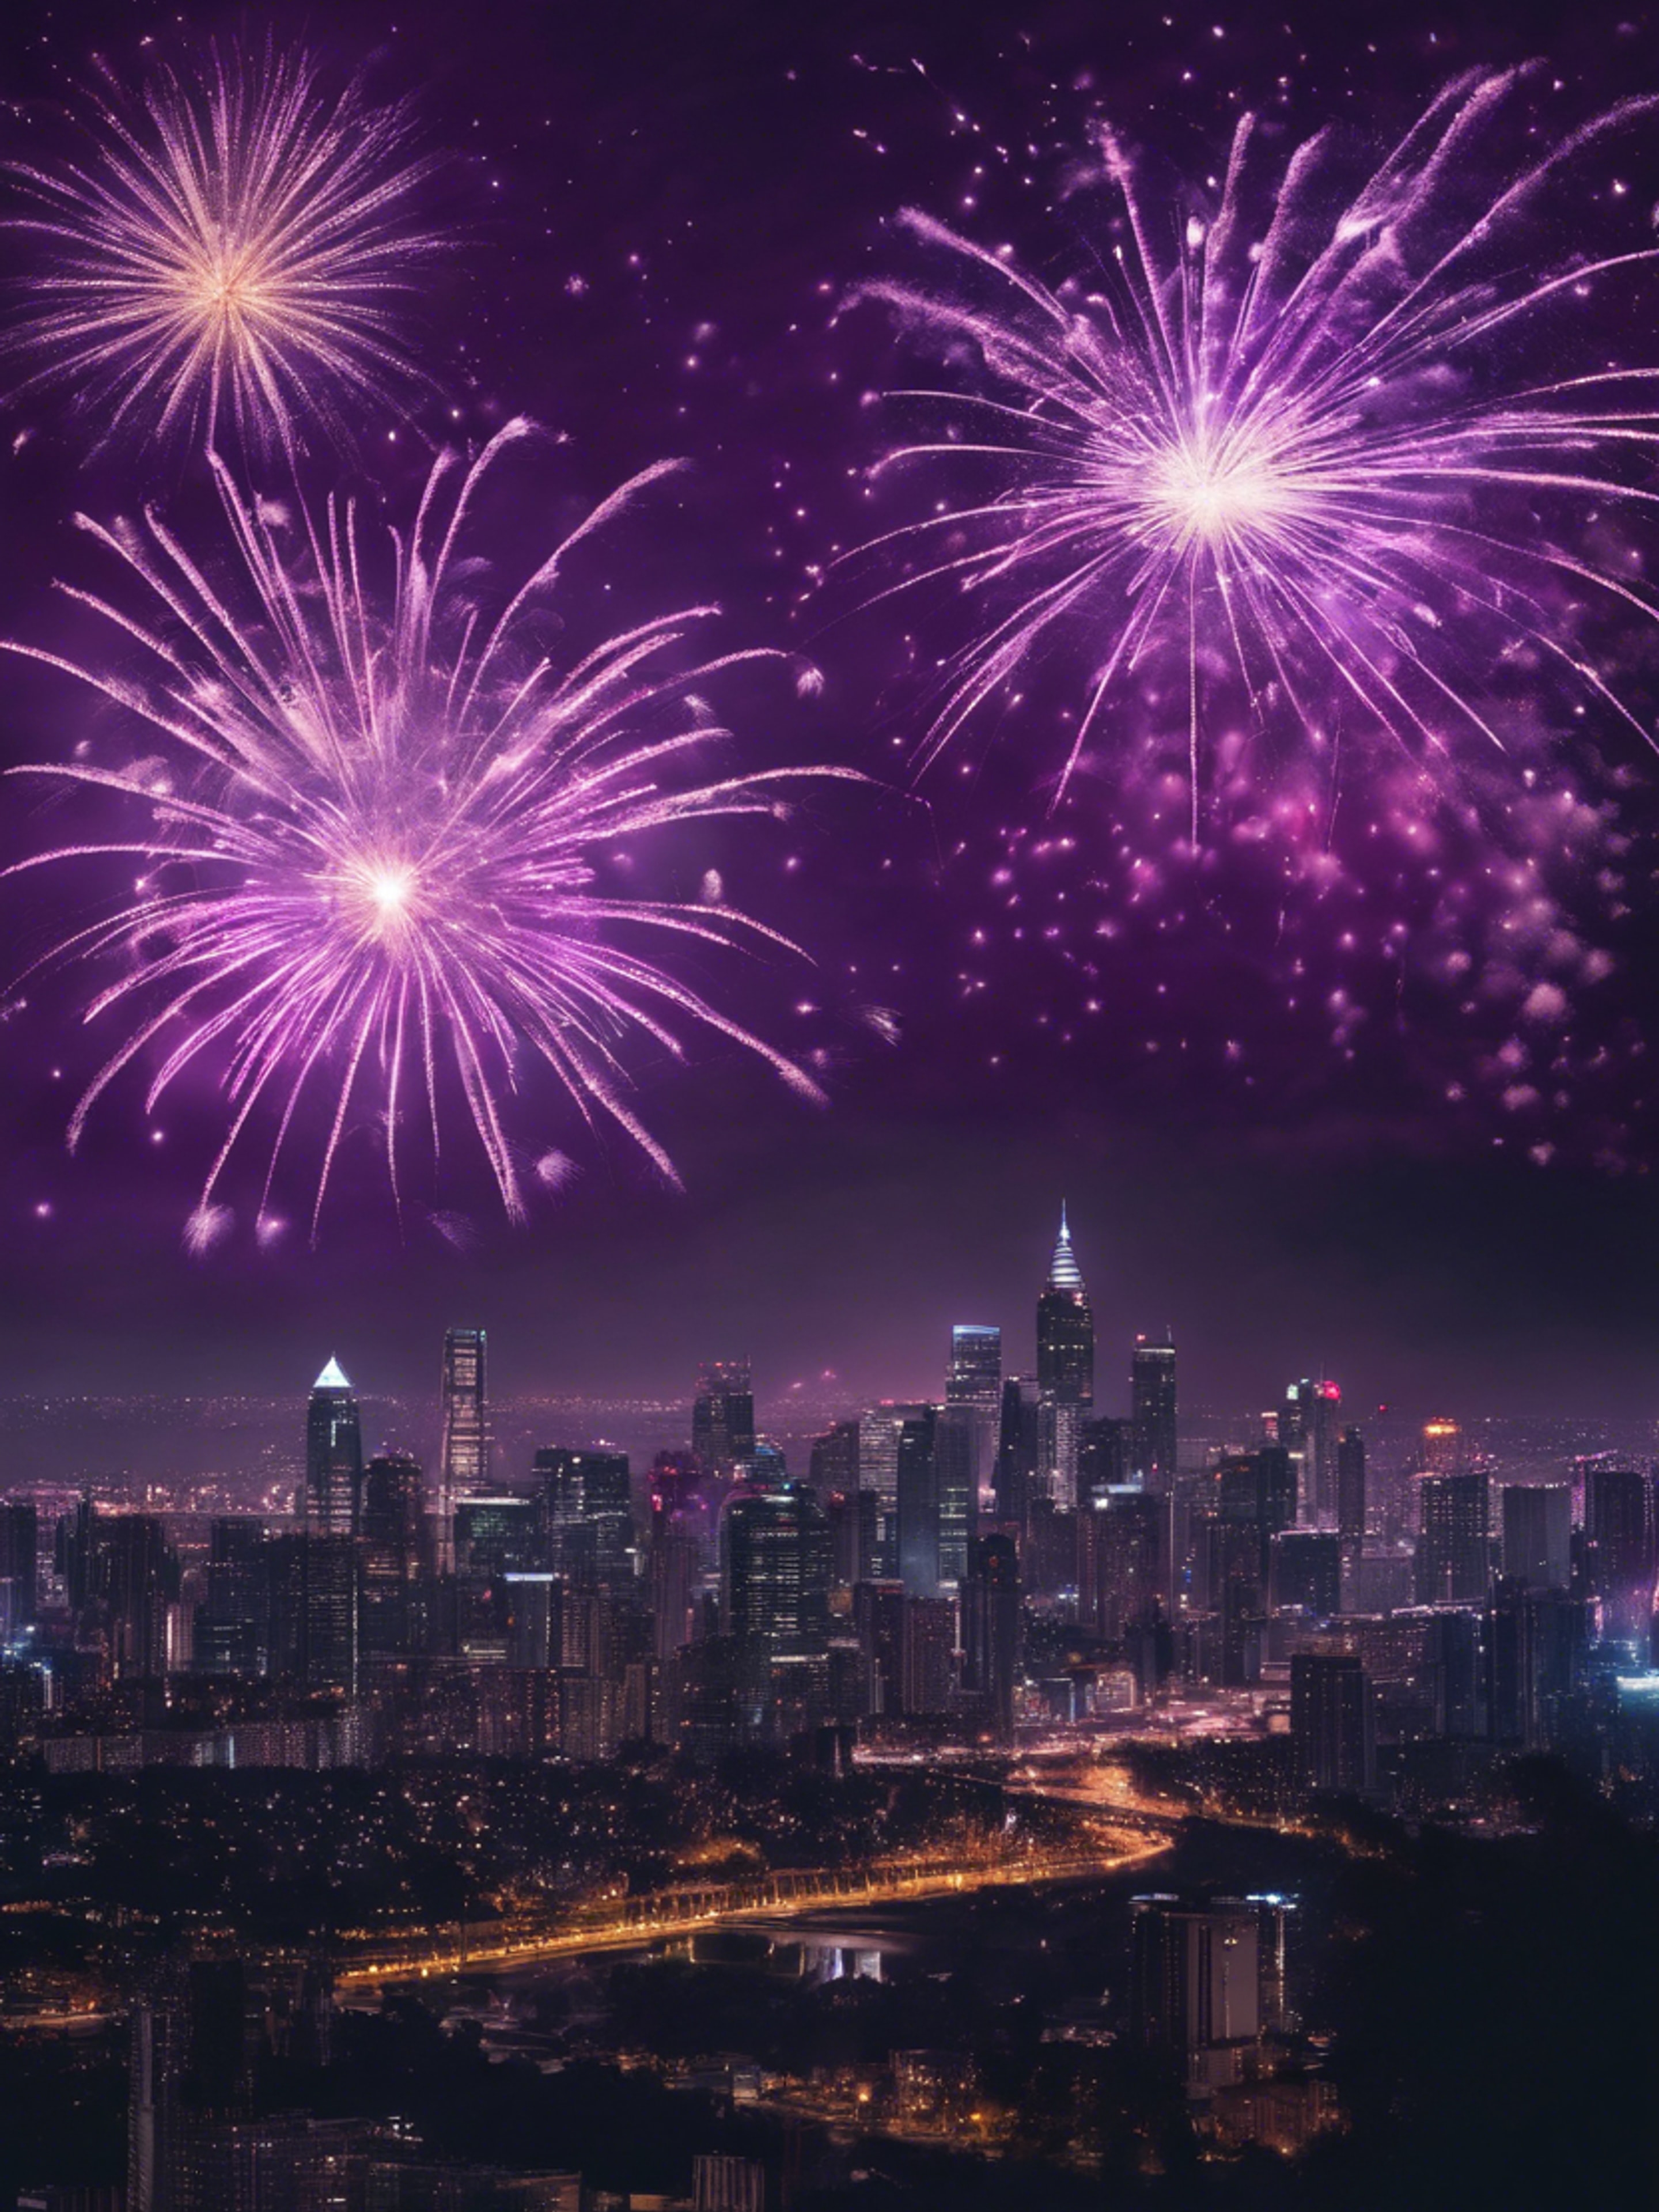 Dark purple fireworks illuminating the night's sky over an illuminated city skyline. 牆紙[a2398988017f44d3a04c]